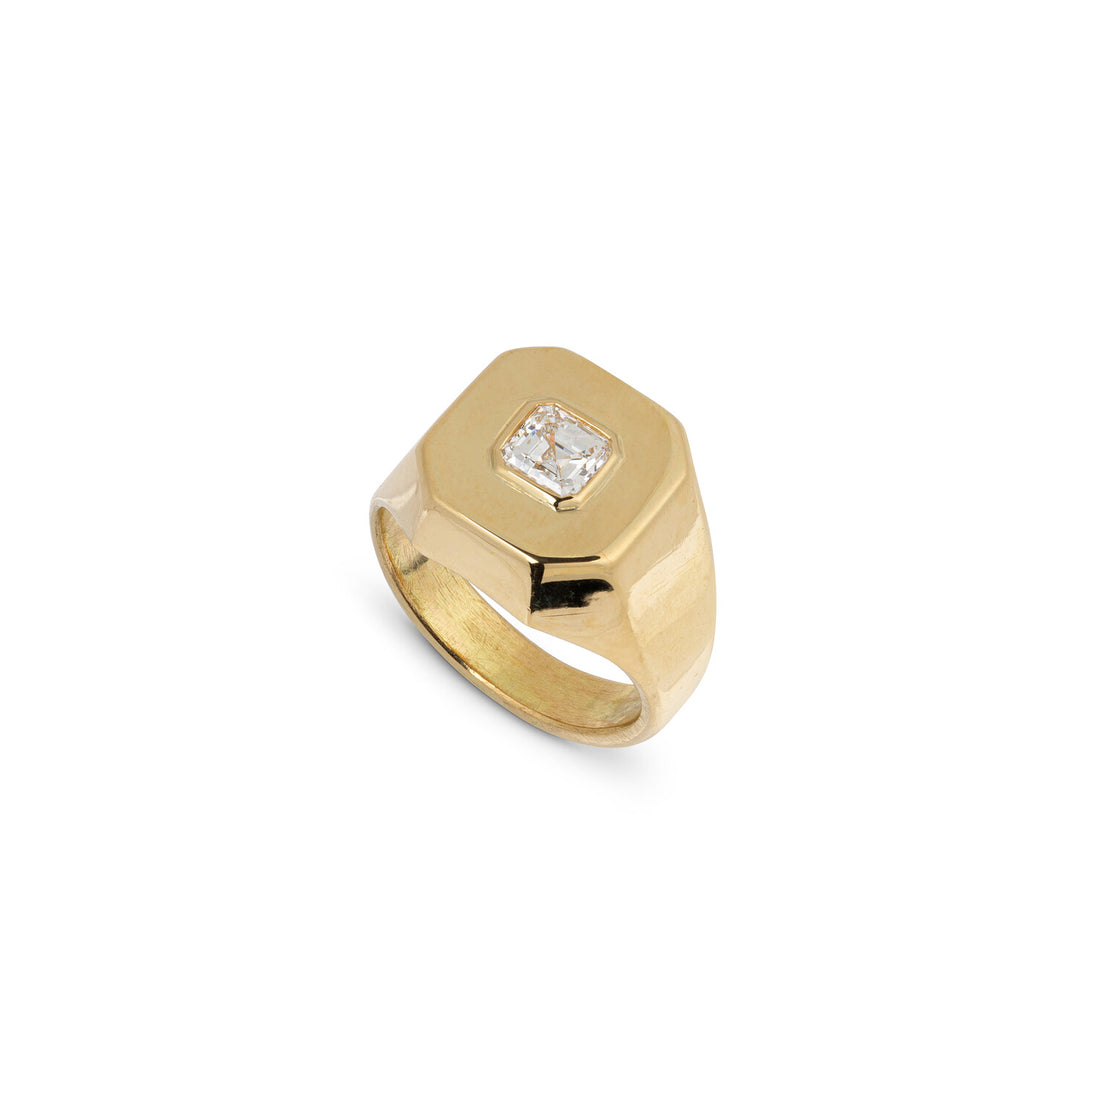  Asscher Cut Diamond Signet Ring by Jessie Thomas | The Cut London